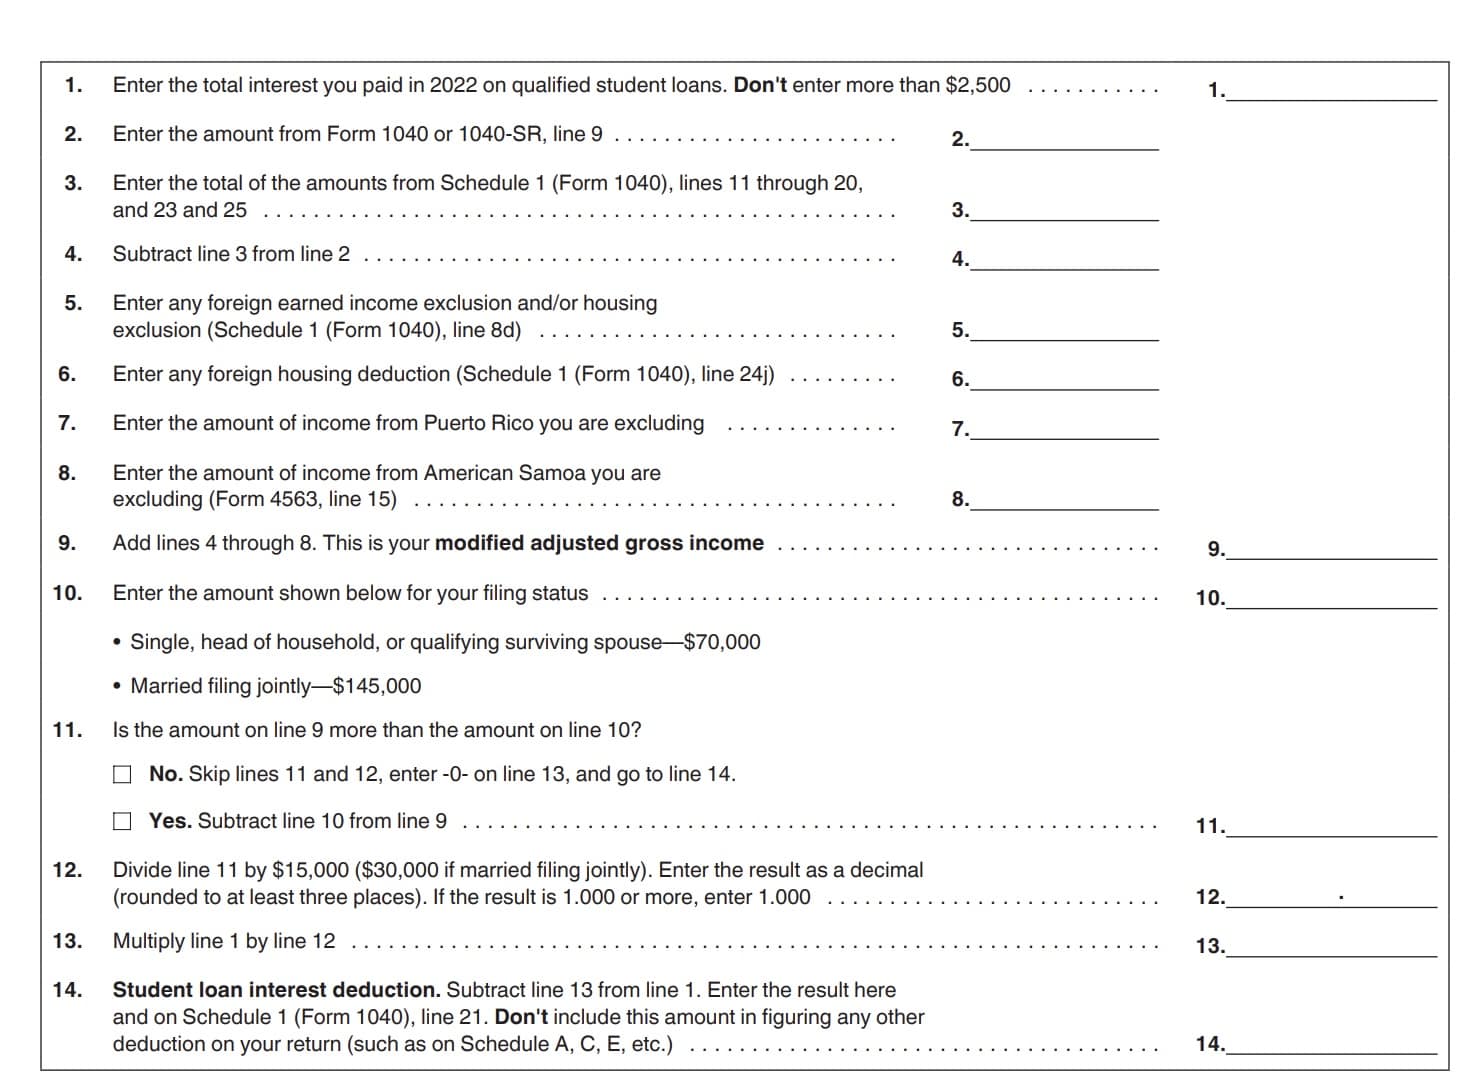 student loan interest deduction worksheet, publication 970